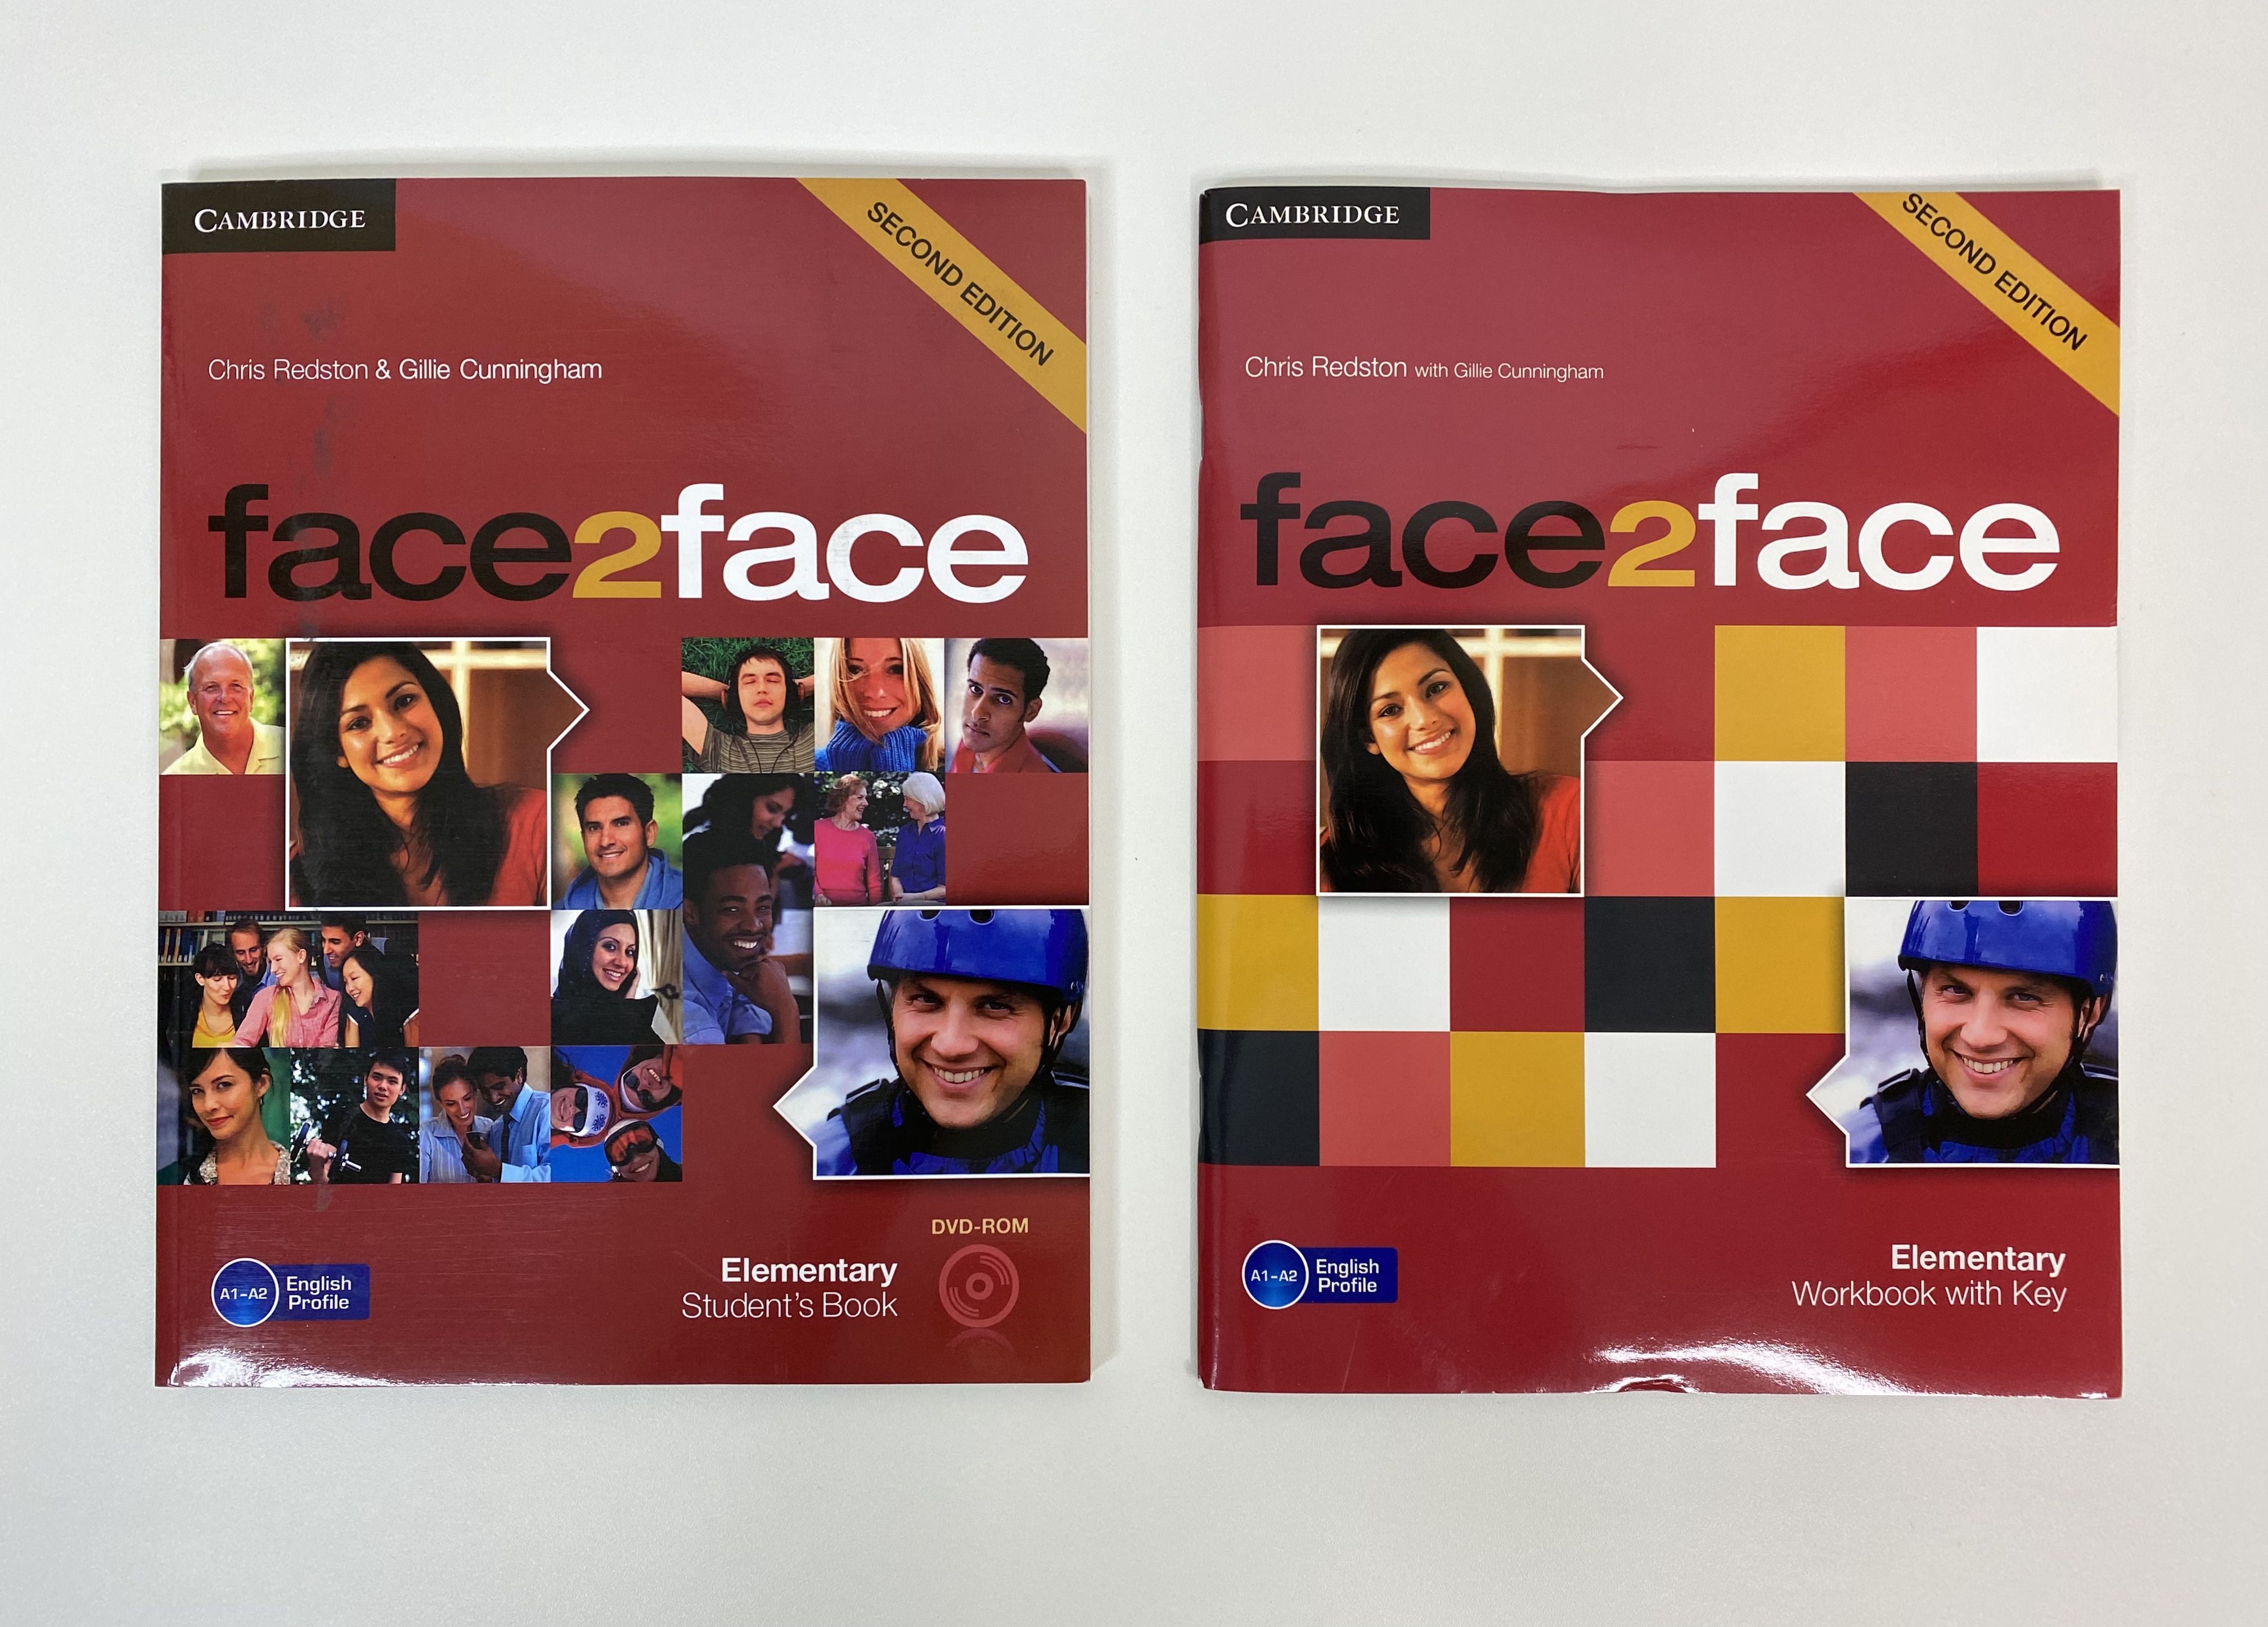 Face2face elementary. Учебник face2face Elementary. Face 2 face Elementary ответы по учебнику. Тетрадь Хатбер Studentbook. Gateways 1 Workbook.